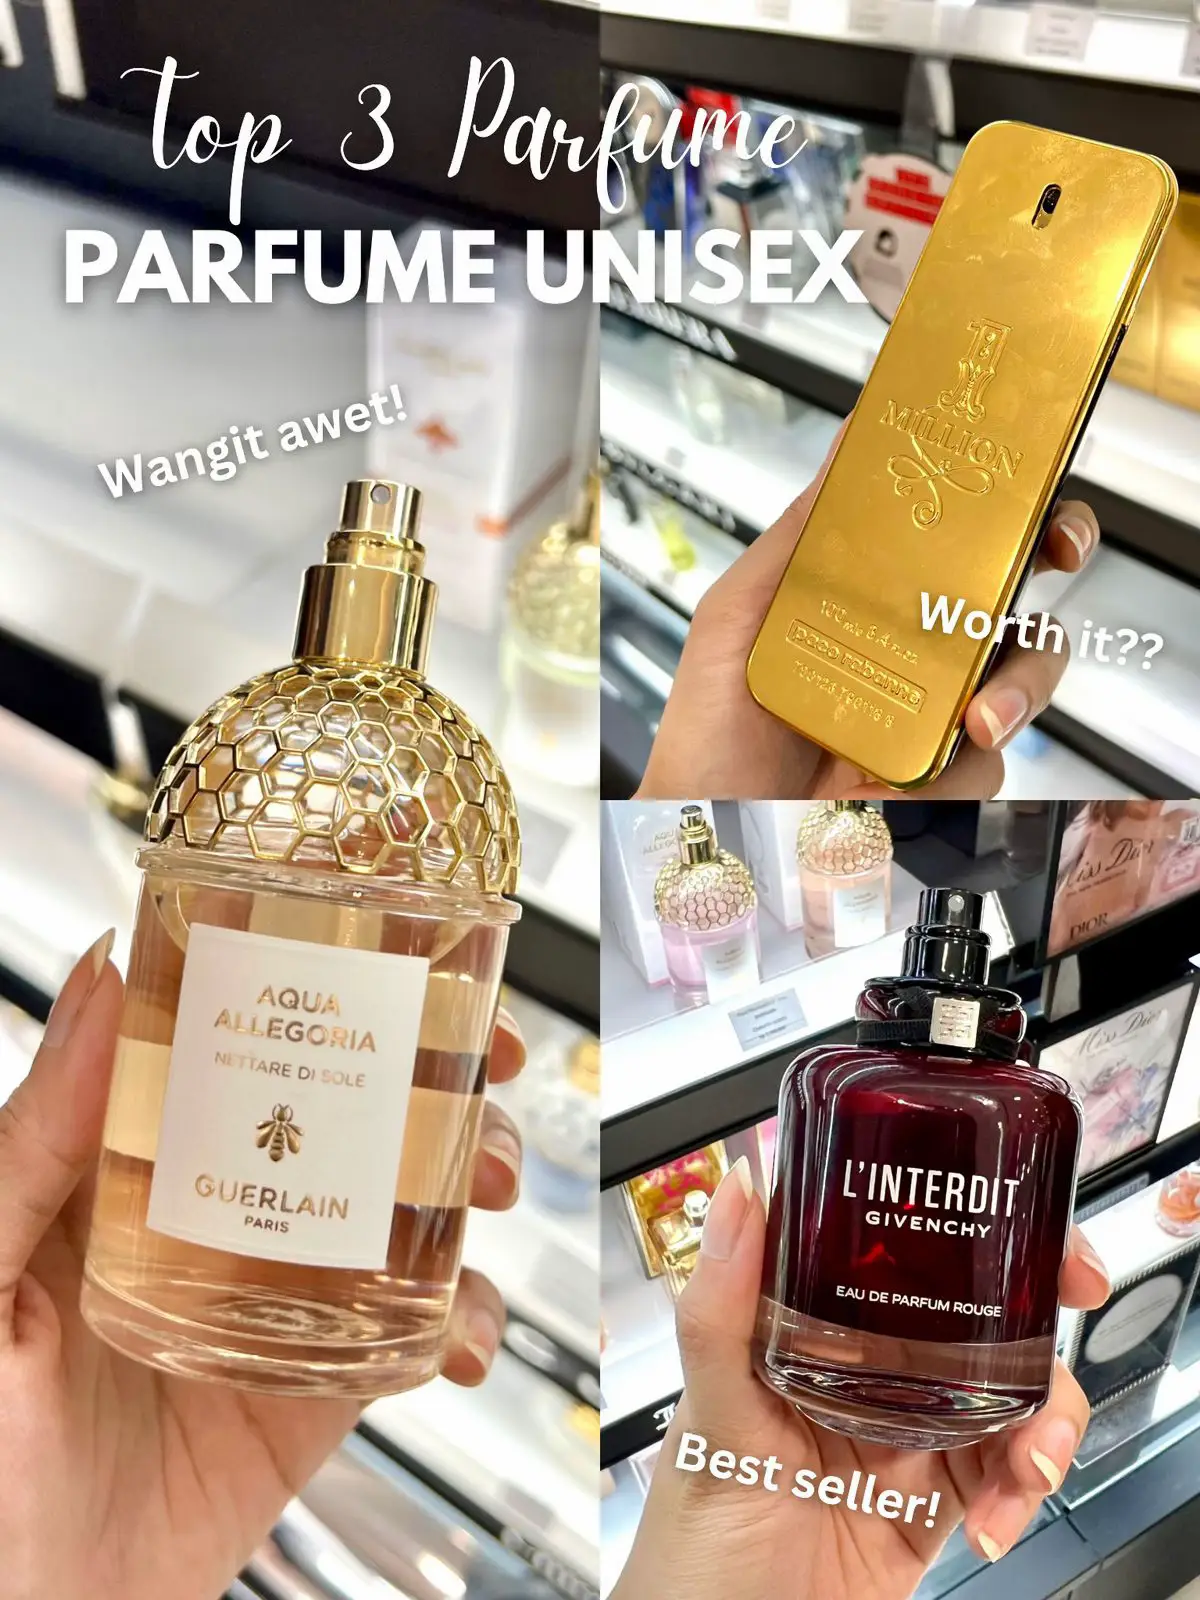 Top 3 Parfum Unisex!, Gallery posted by naurahsyadira